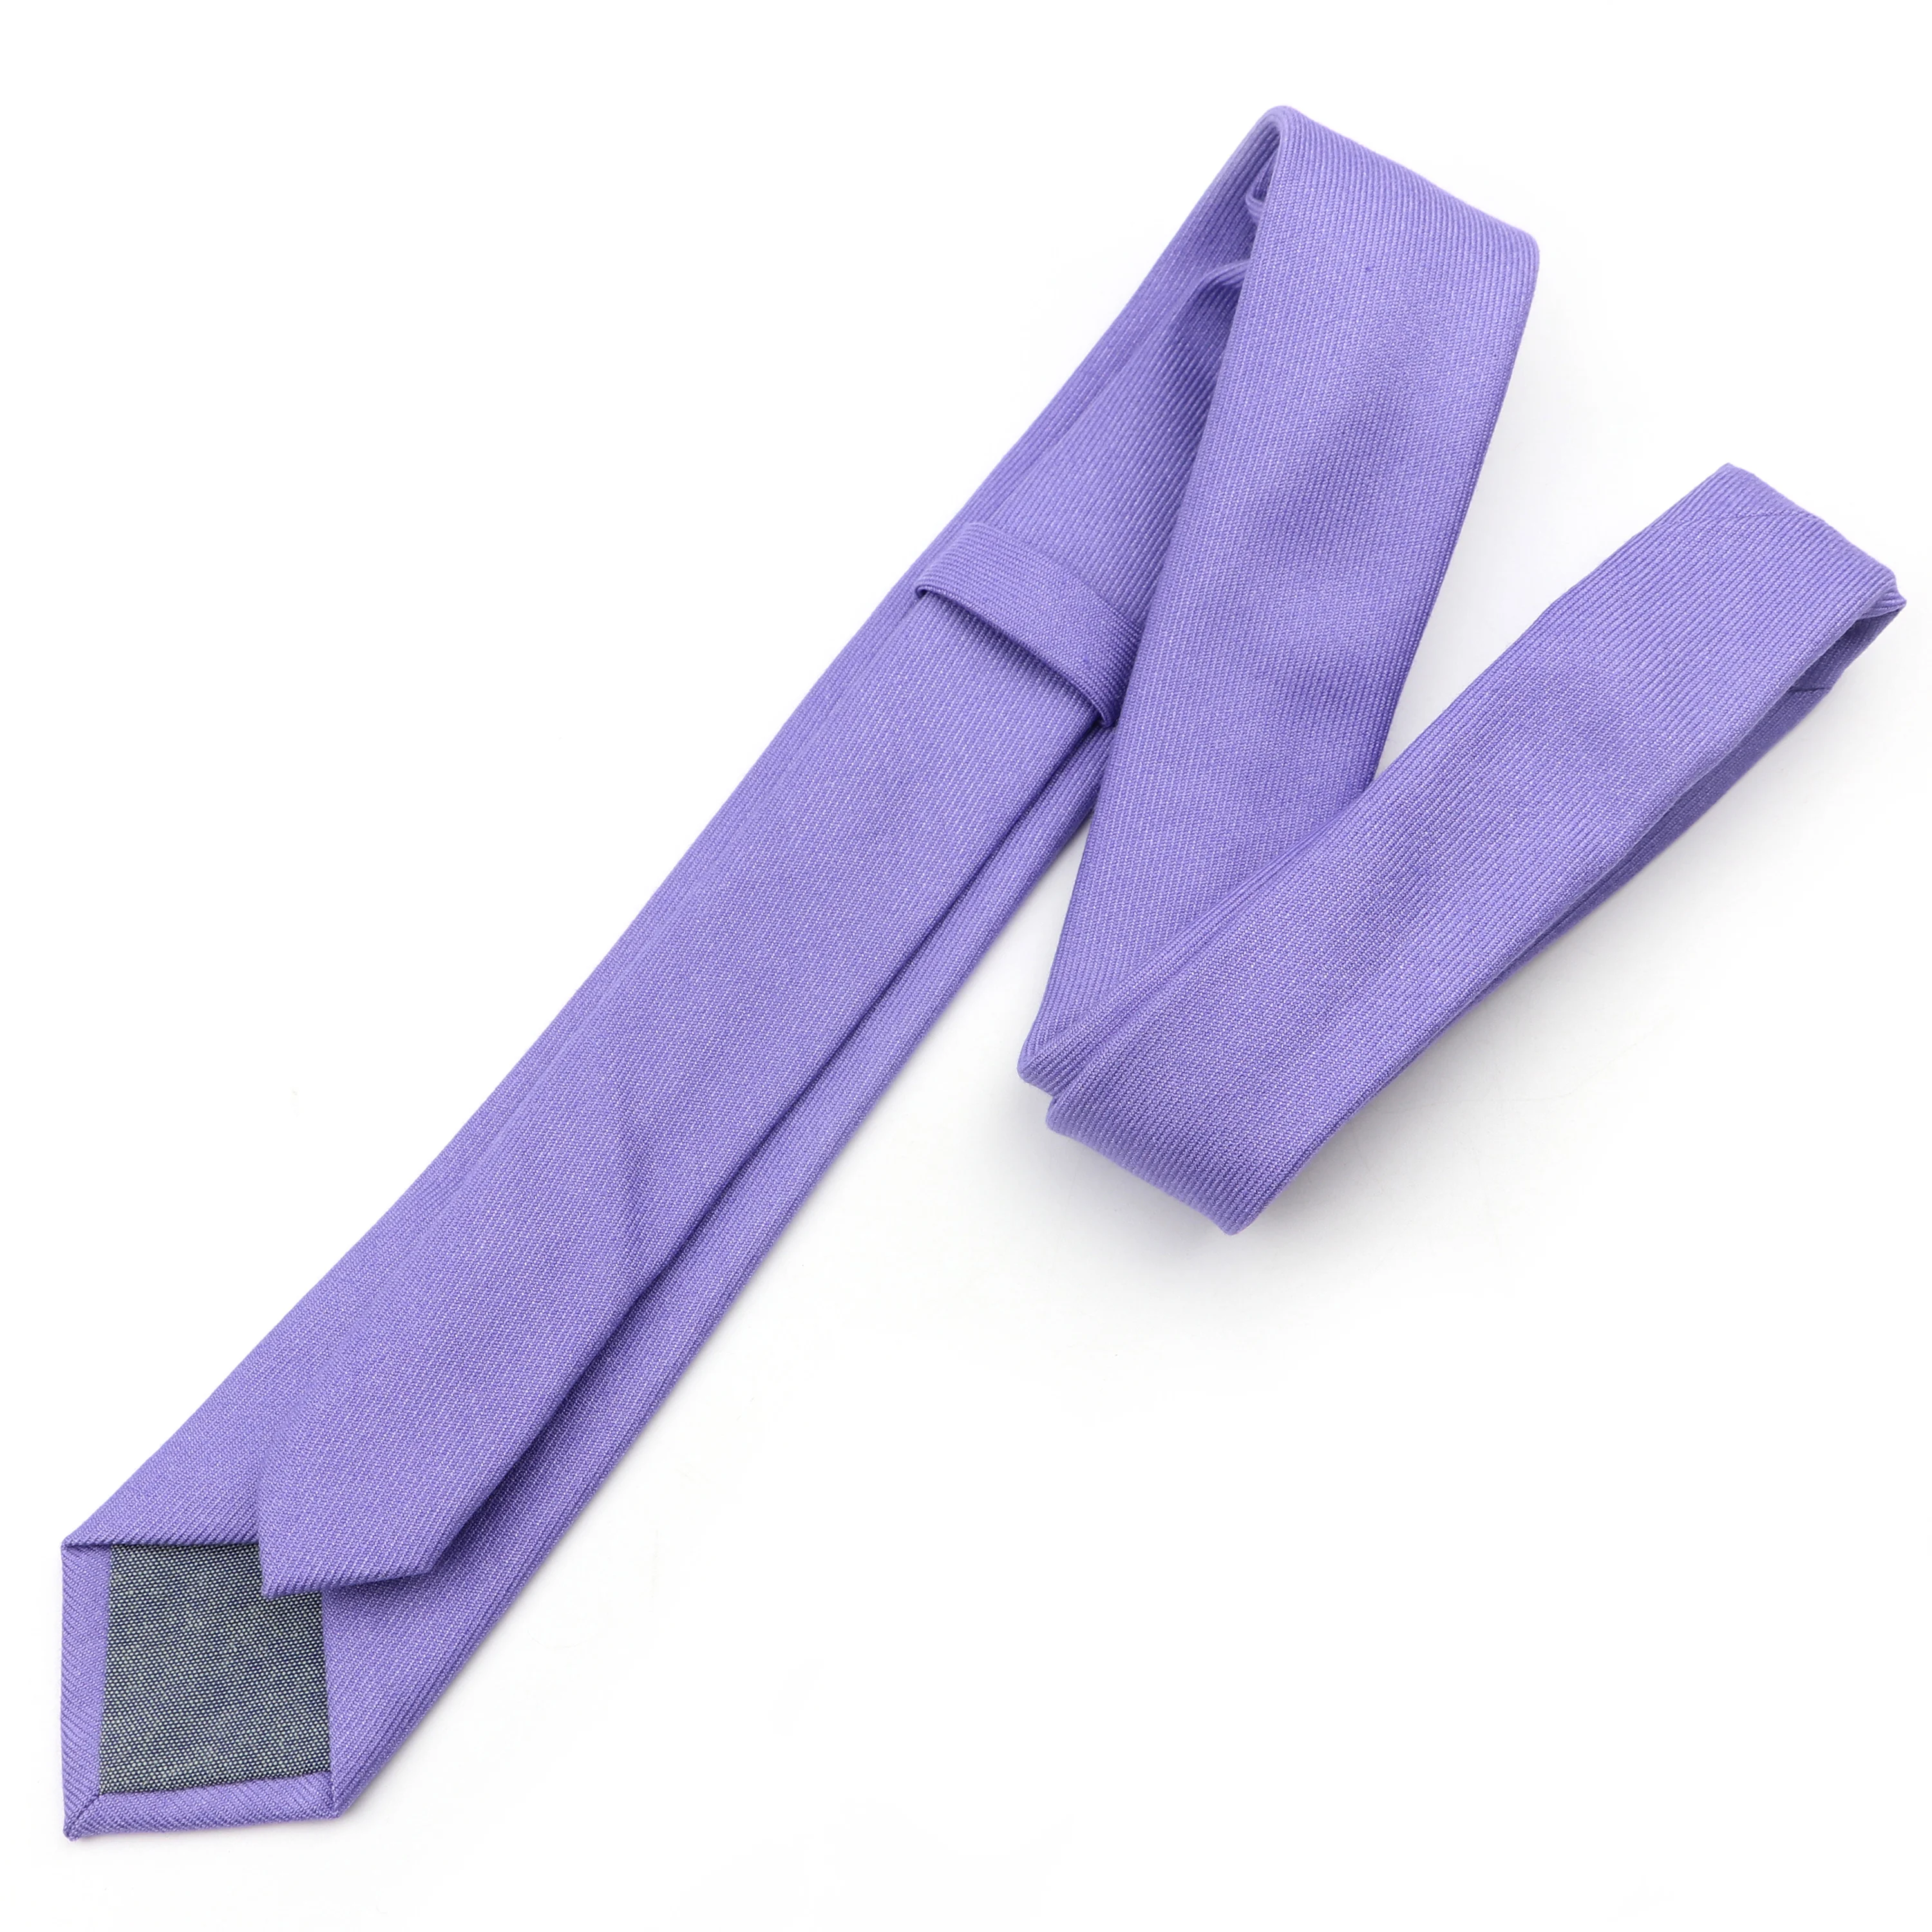 New Colorful Men's Solid Color Necktie 100% Cotton 6.5CM Skinny Pink Green Sky Blue Wedding Party Tie Gift Cravat Men Accessory images - 6